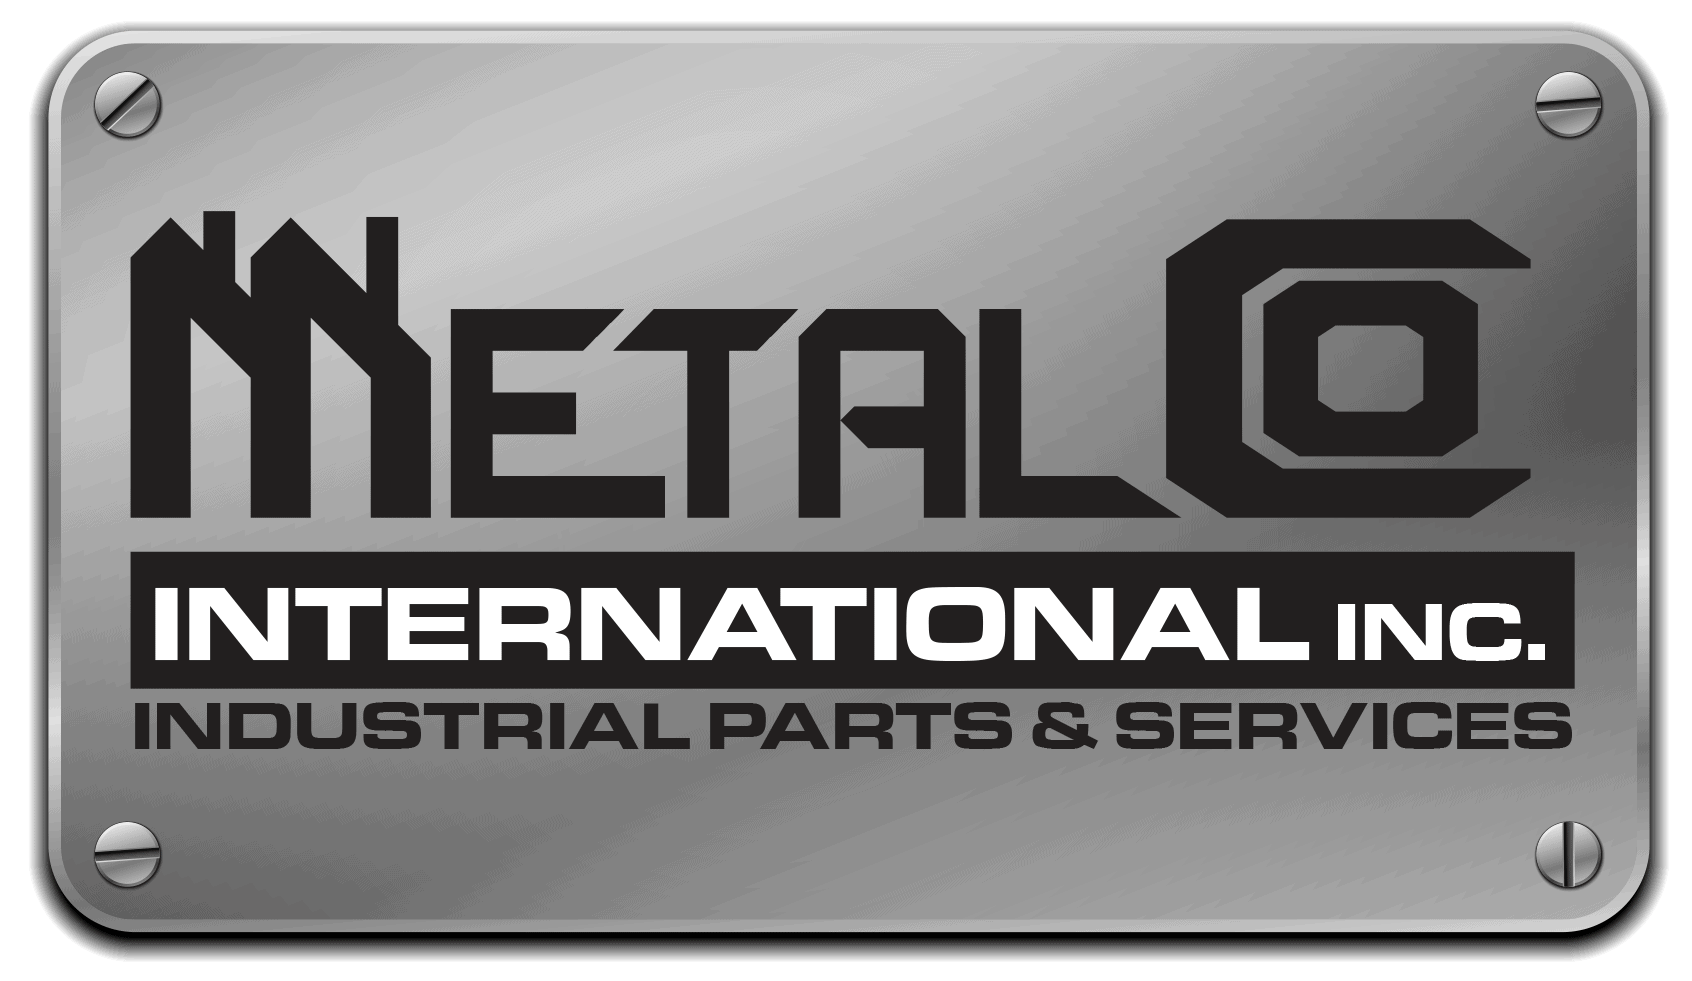 MetalCo International Inc.